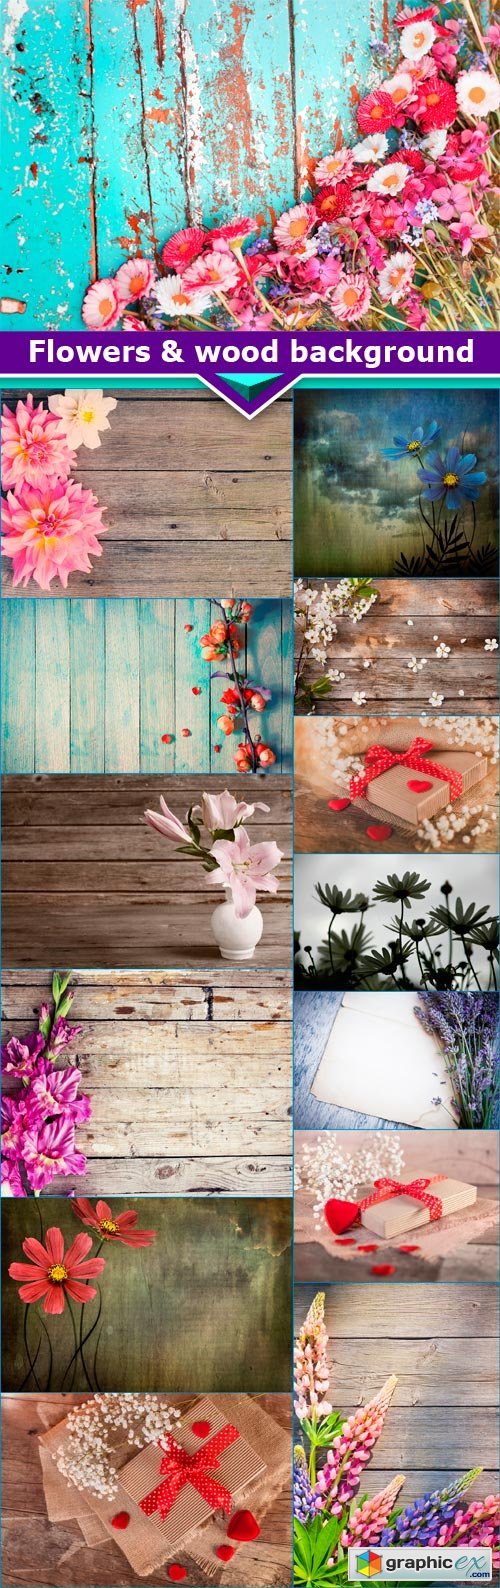 Flowers & wood background 14x JPEG